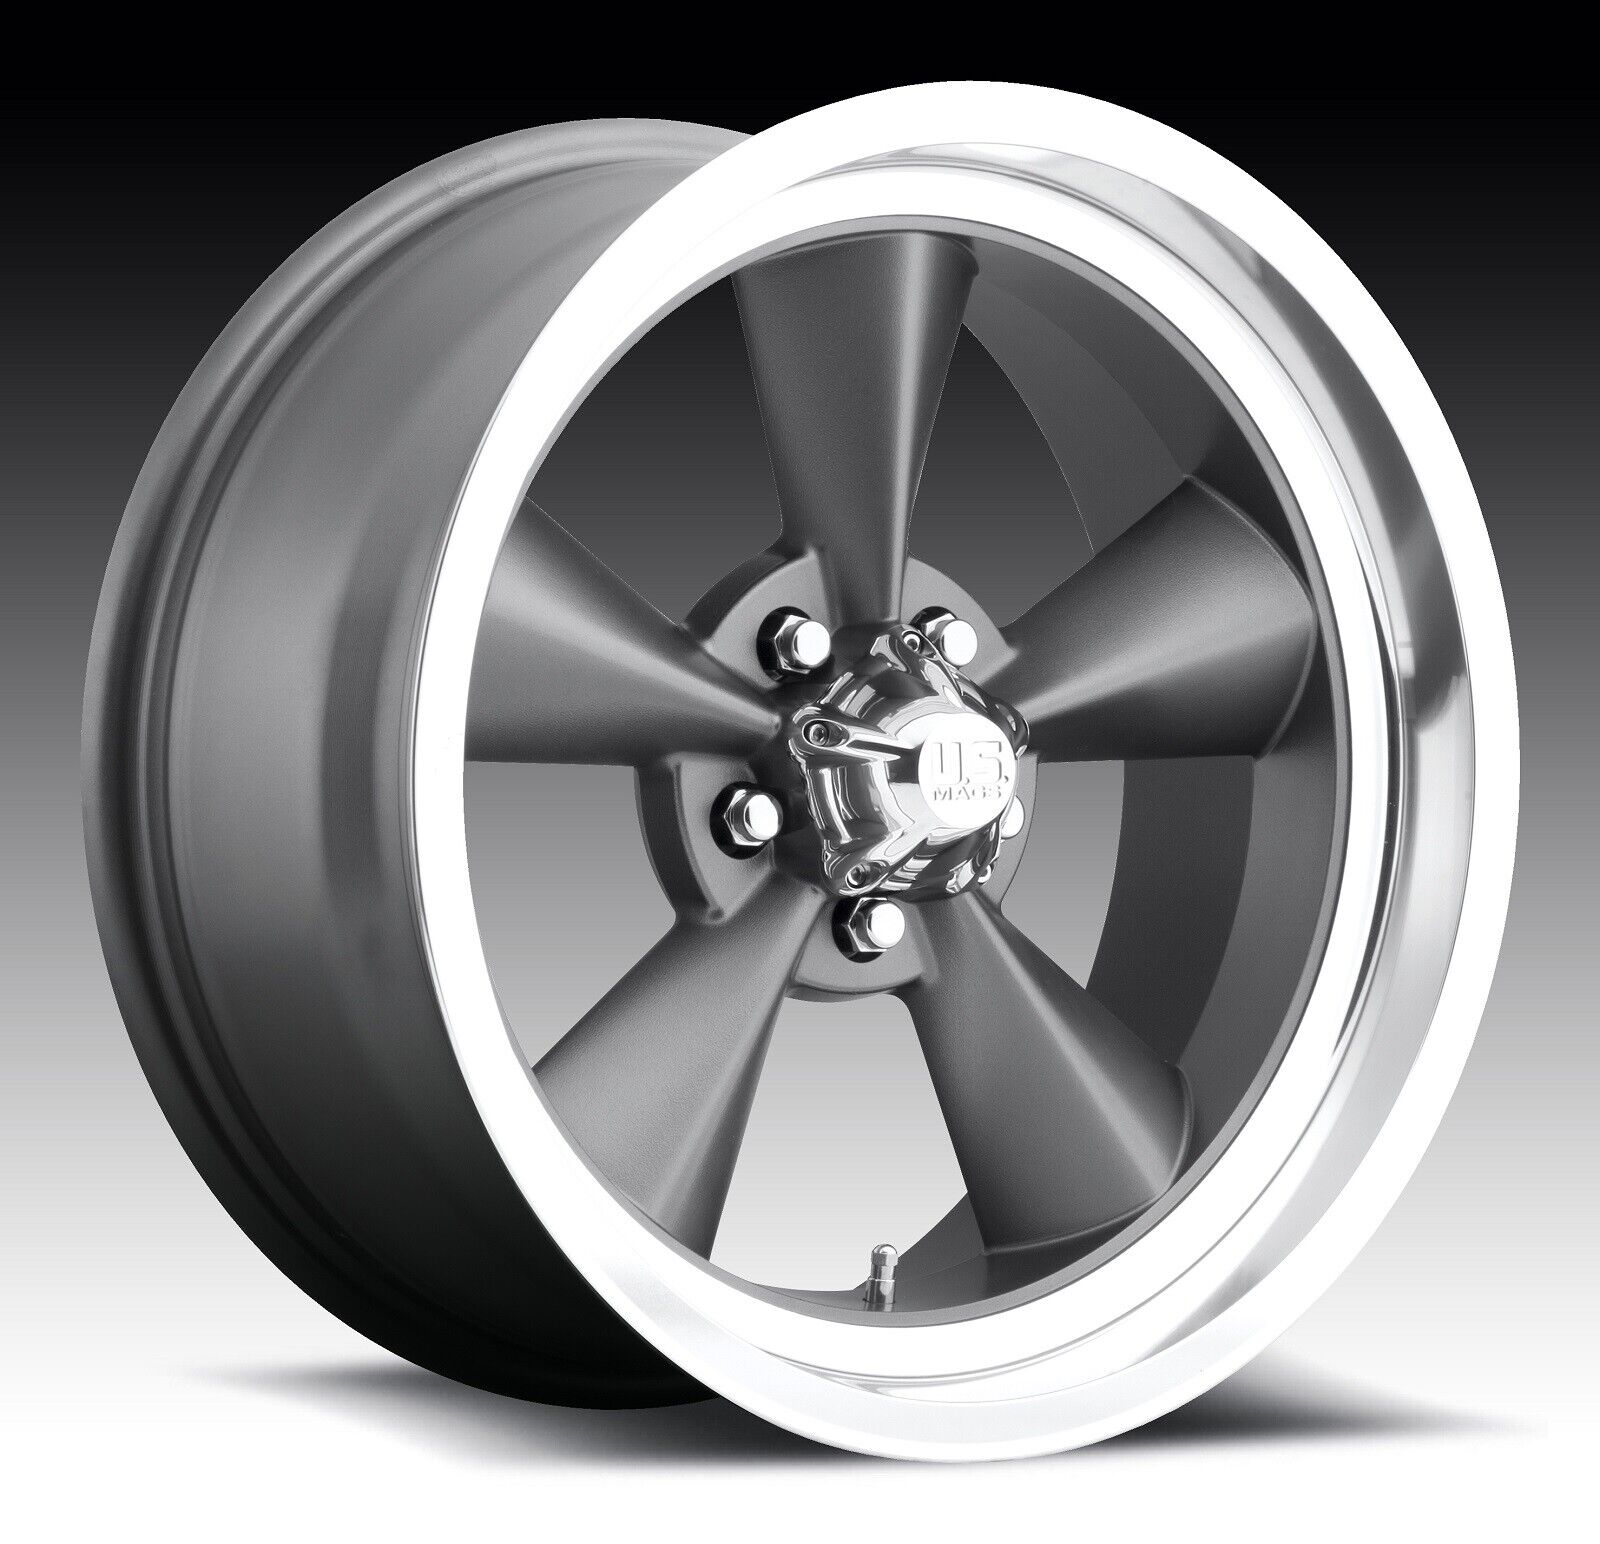 CPP US Mags U102 Standard wheels 15x8 fits: CHEVY S10 BLAZER SONOMA